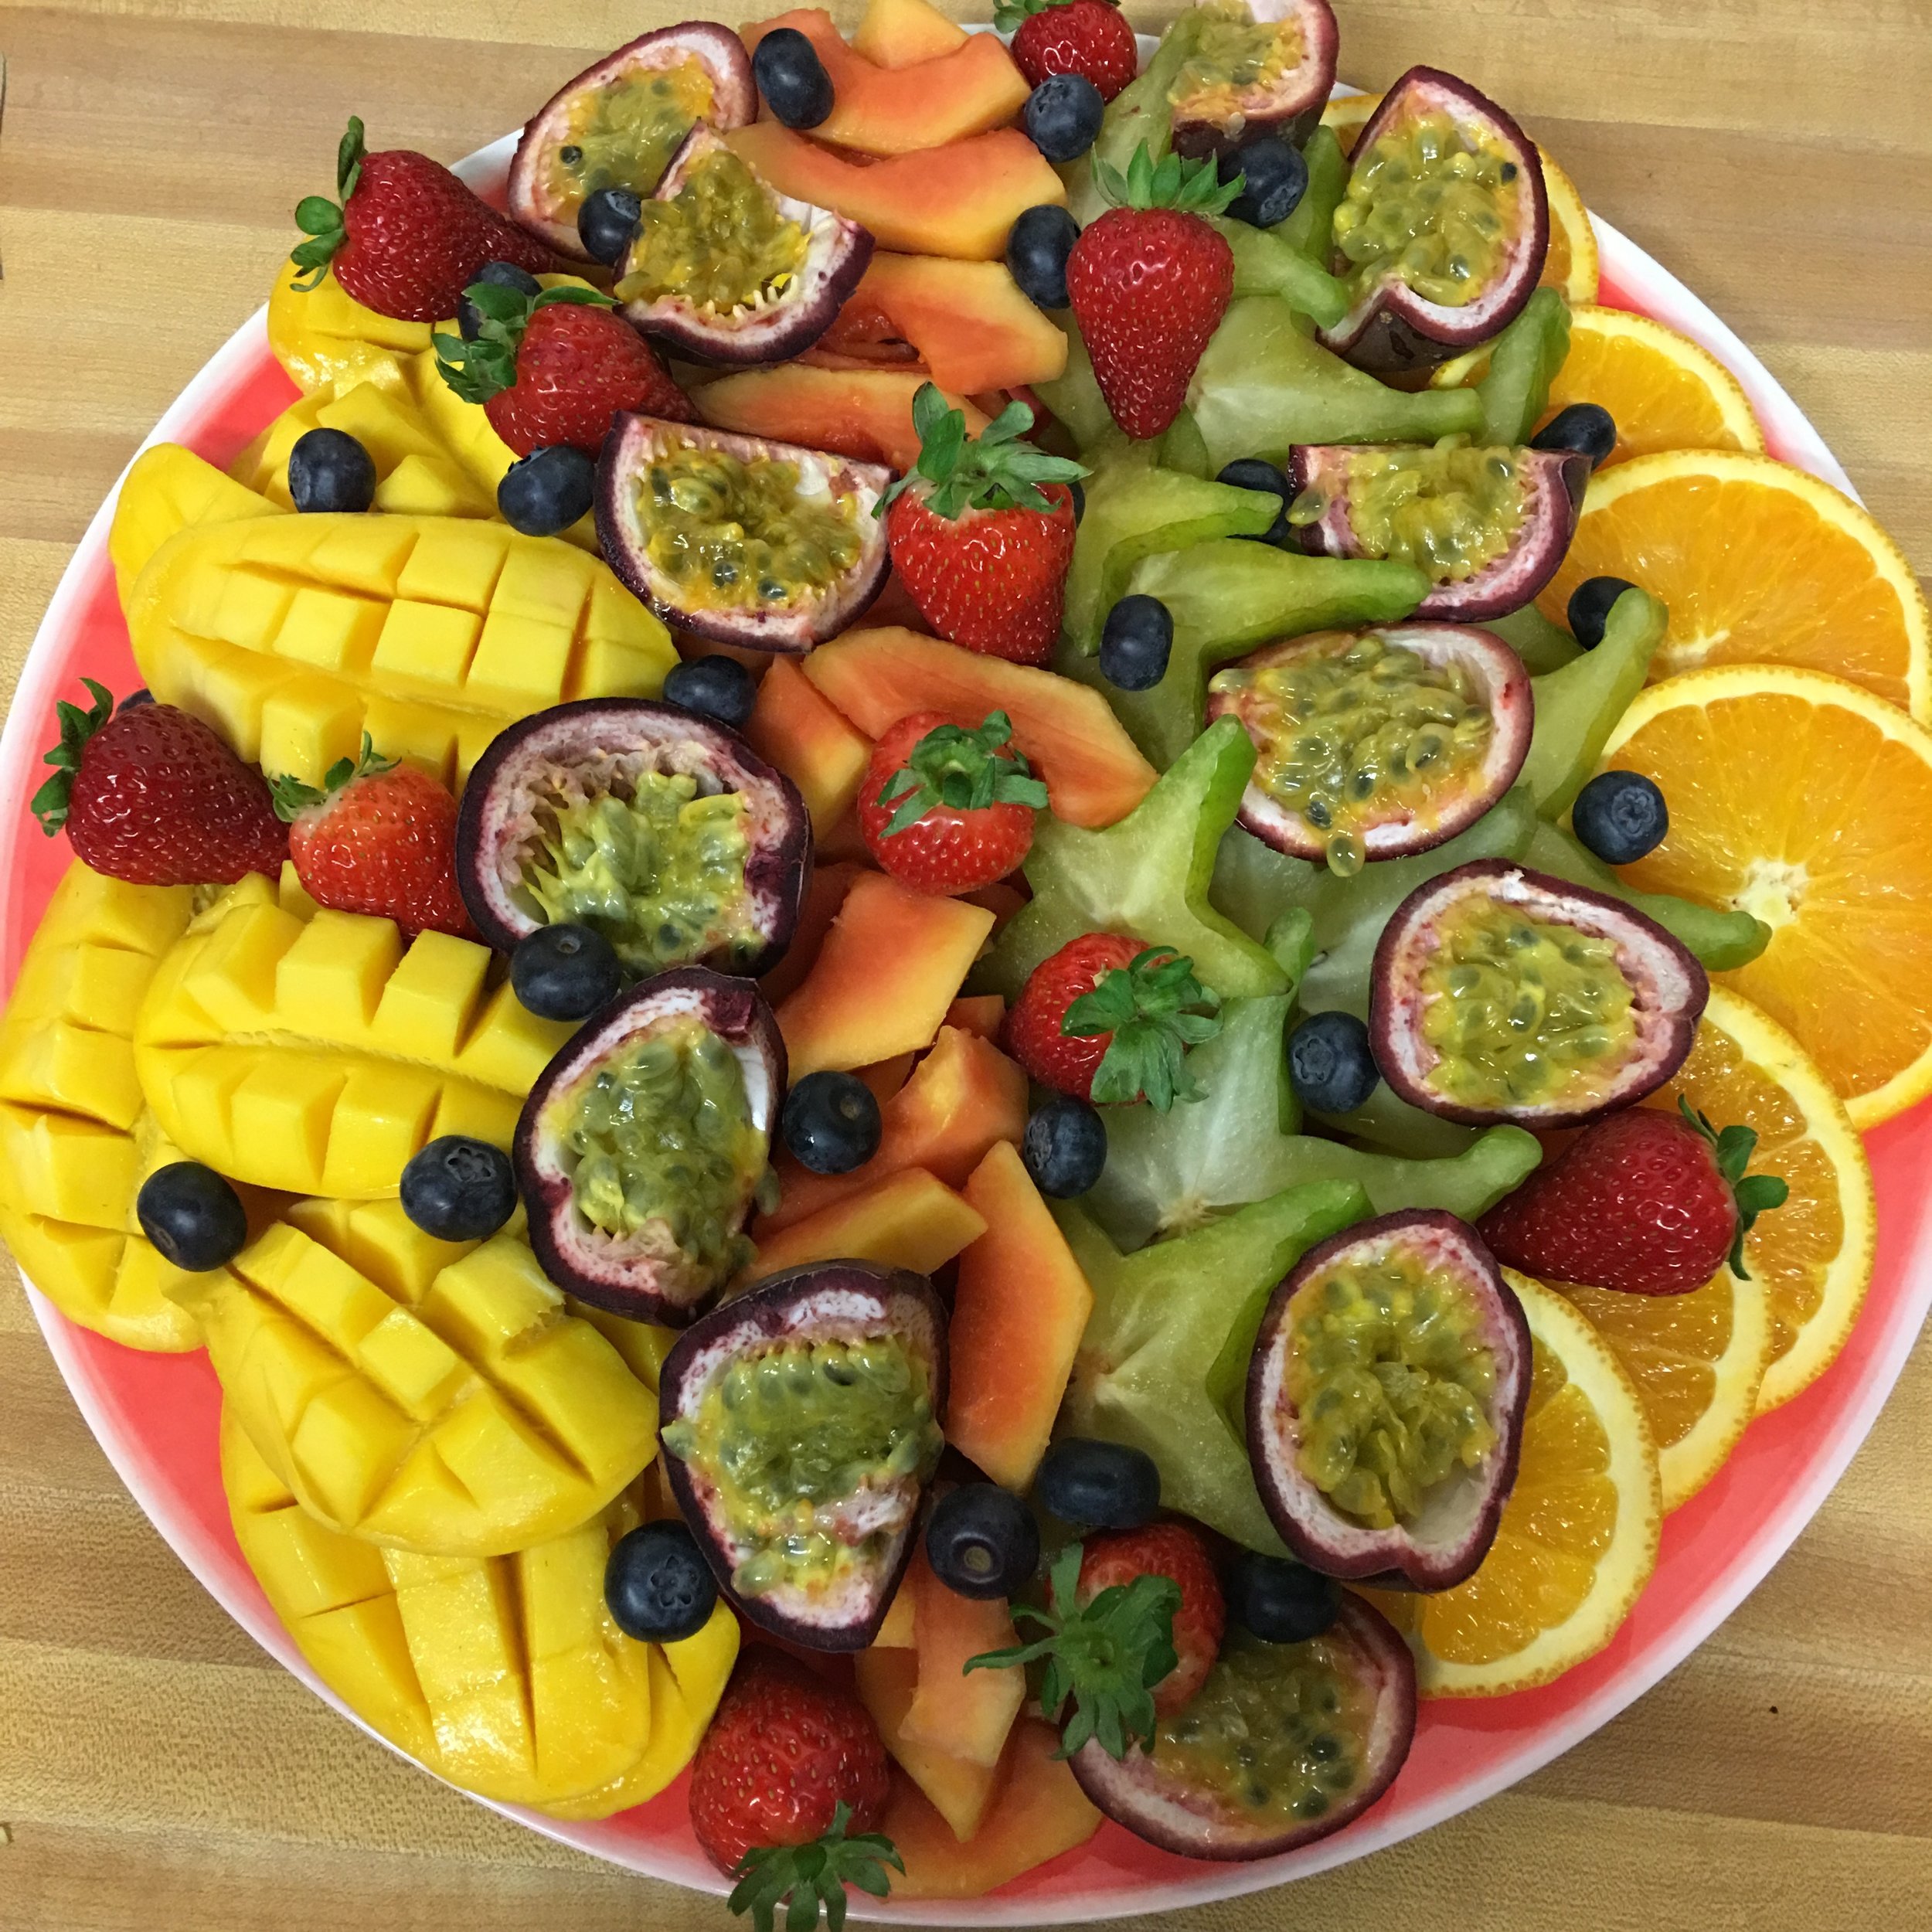 Tropical fruit tray 1.jpeg